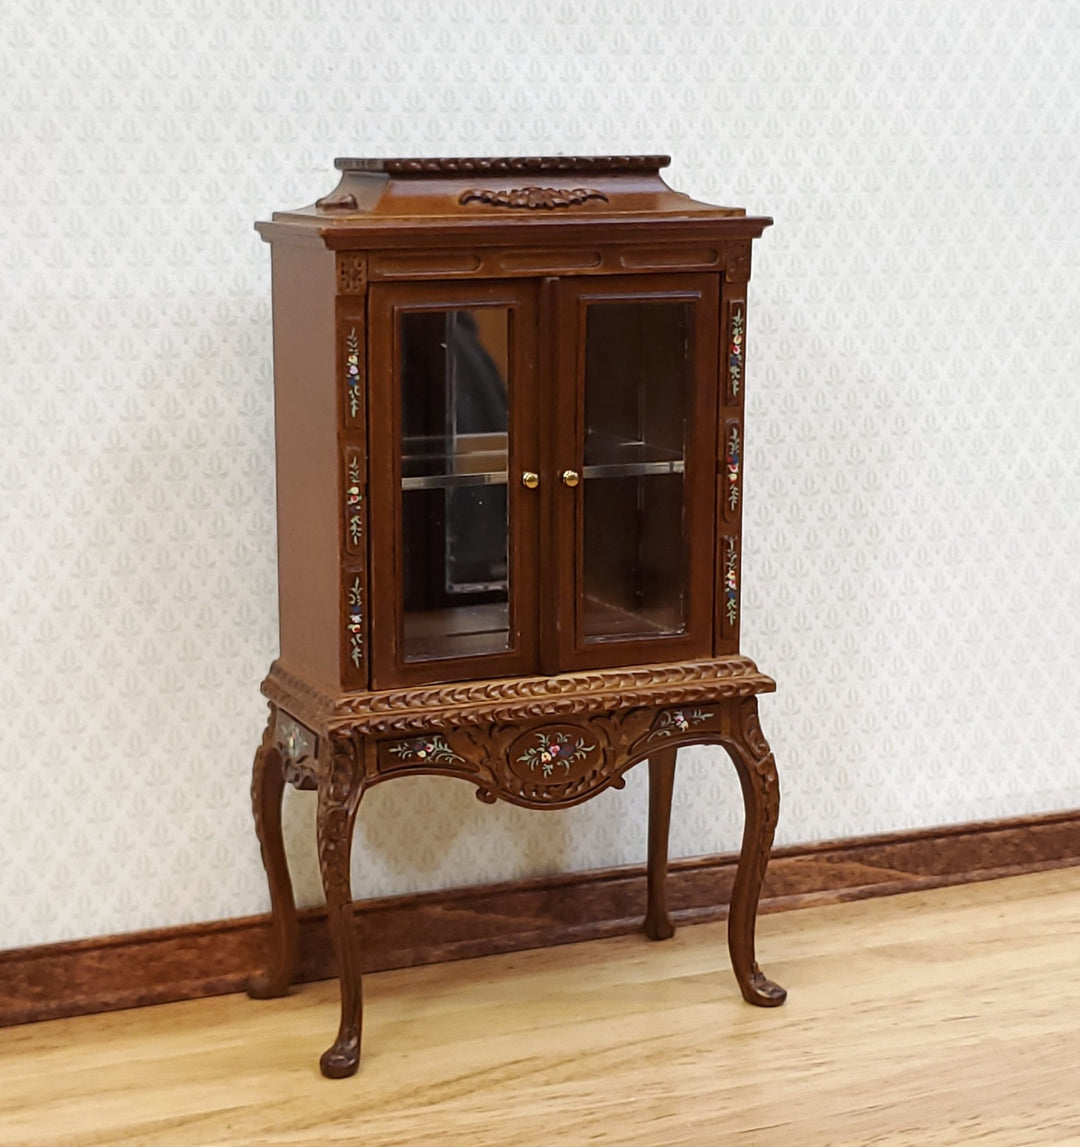 JBM Dollhouse Display Cabinet Hand Painted Details 1:12 Scale Furniture Walnut Finish - Miniature Crush